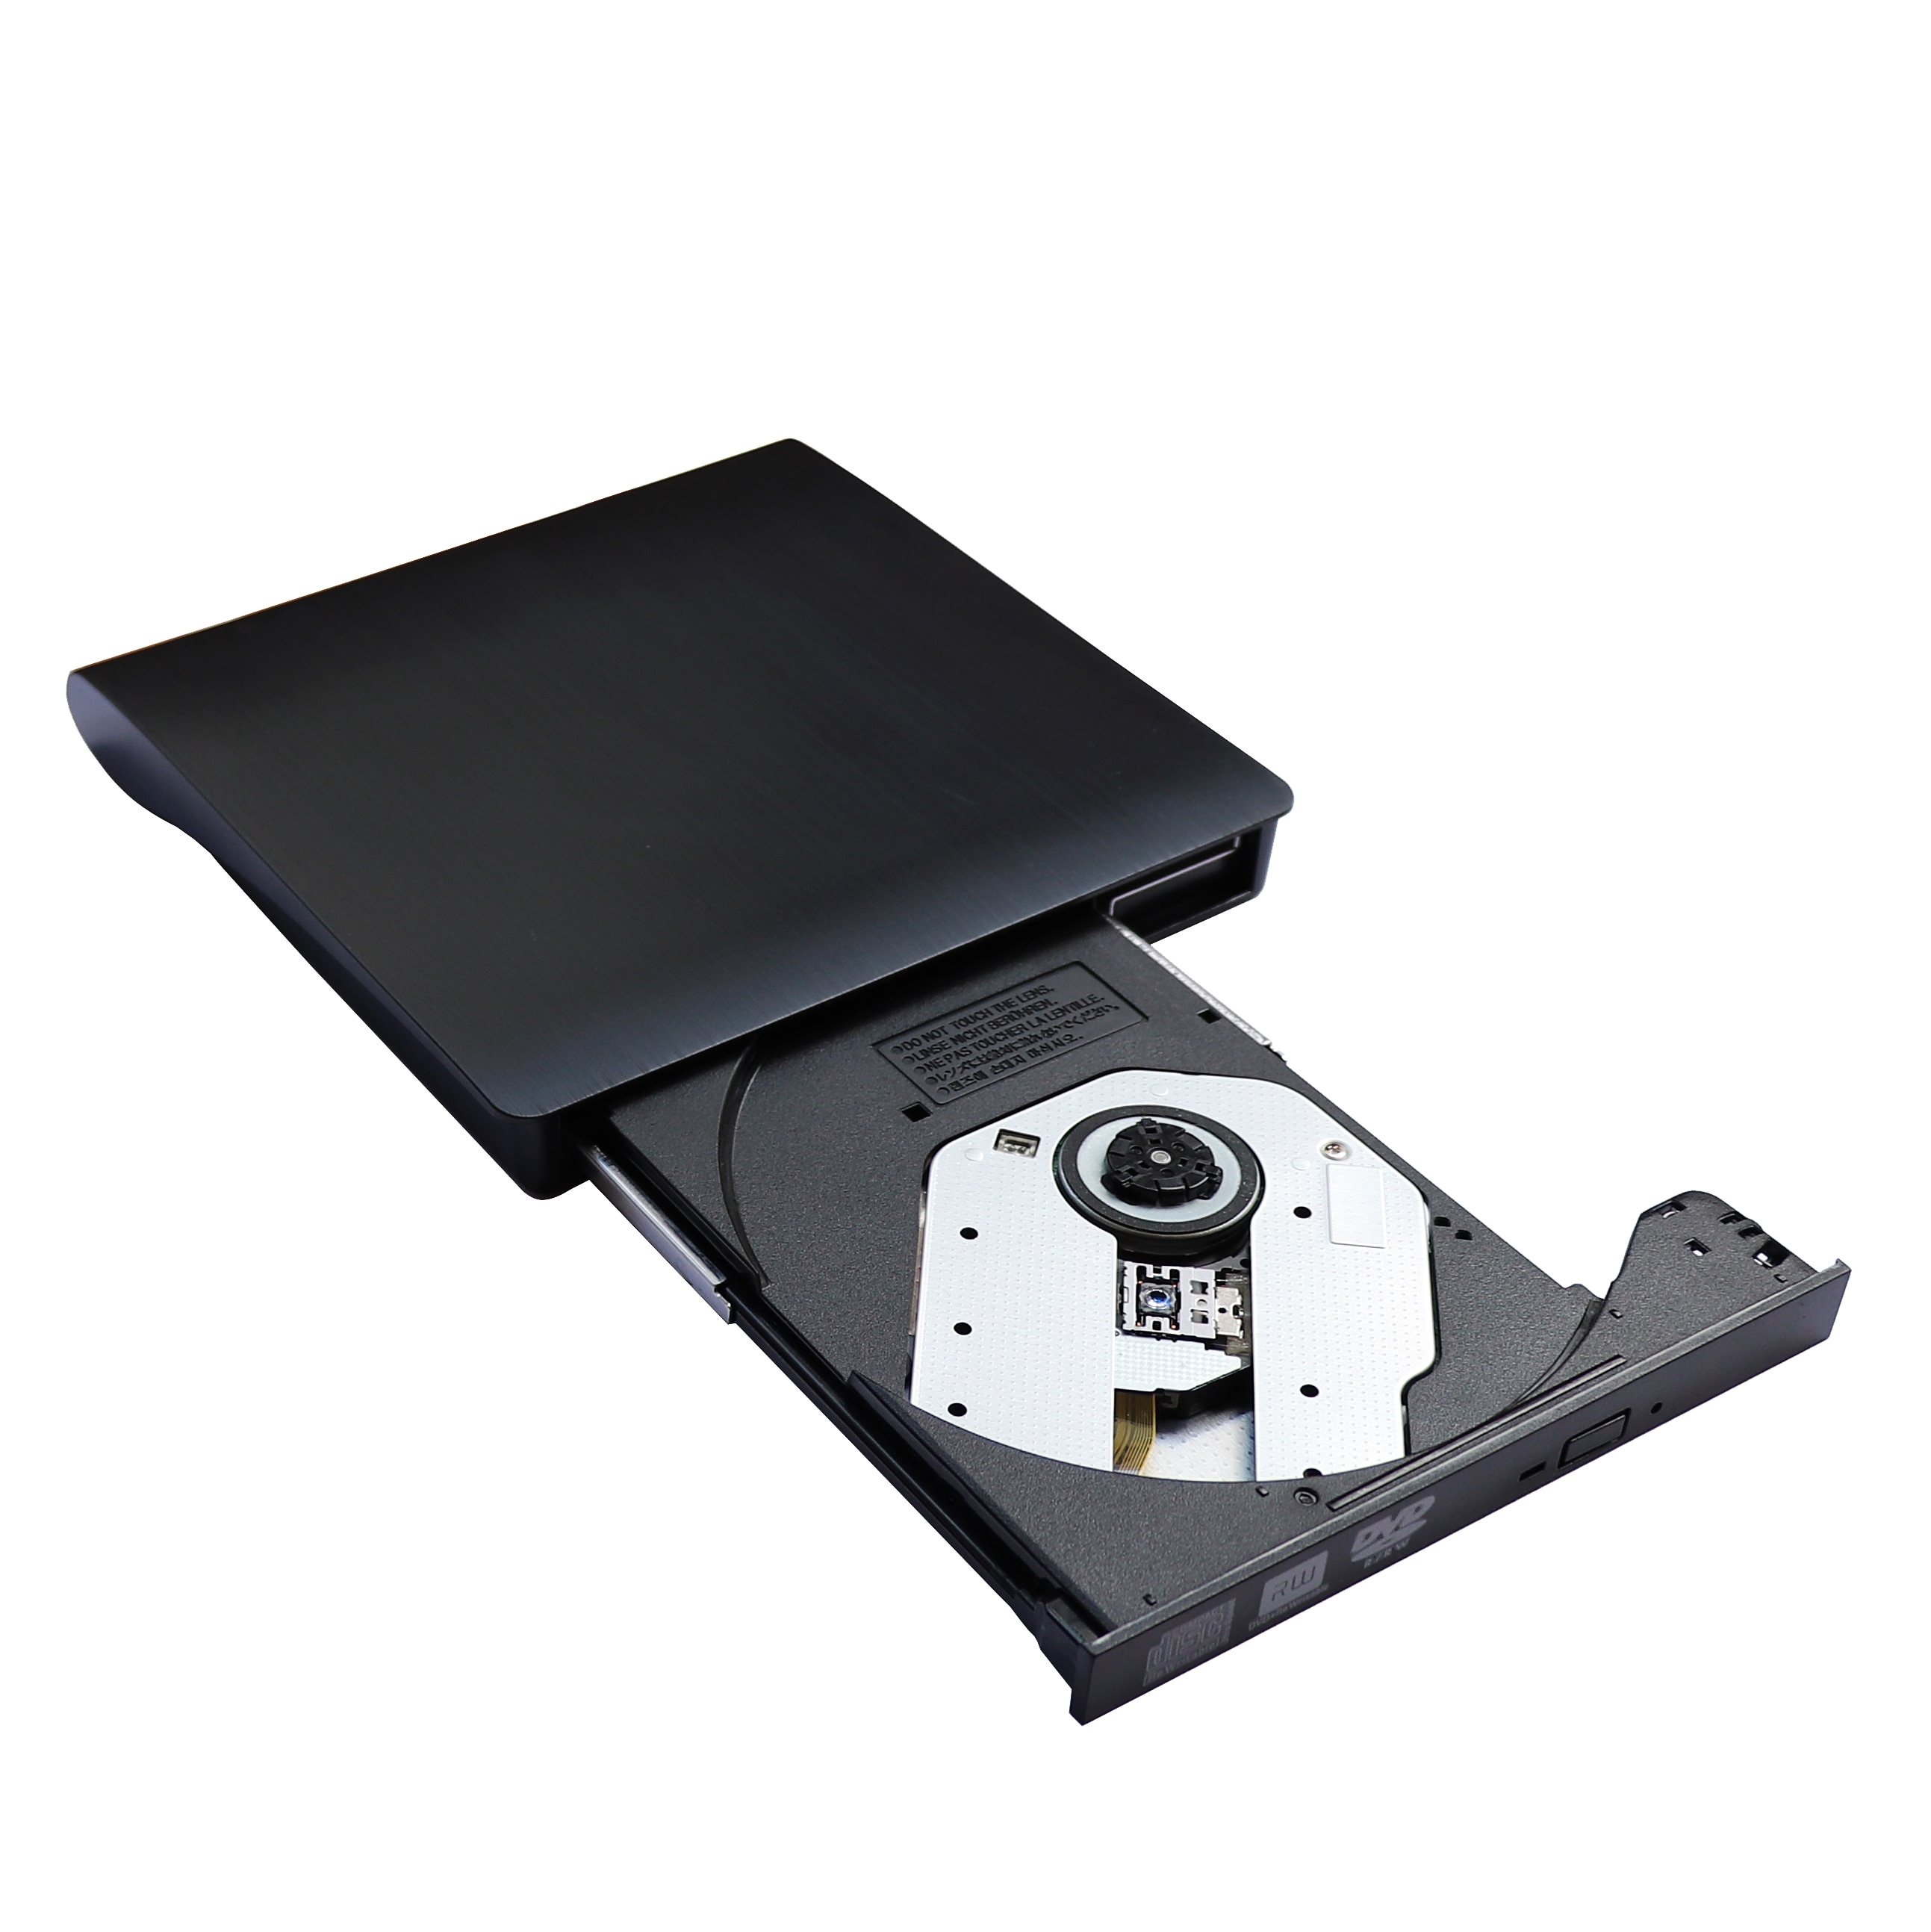 USB 3.0 Slim External DVD RW CD Writer Drive Burner Reader Player Optical Drives For Laptop PC  dvd burner  dvd portatil